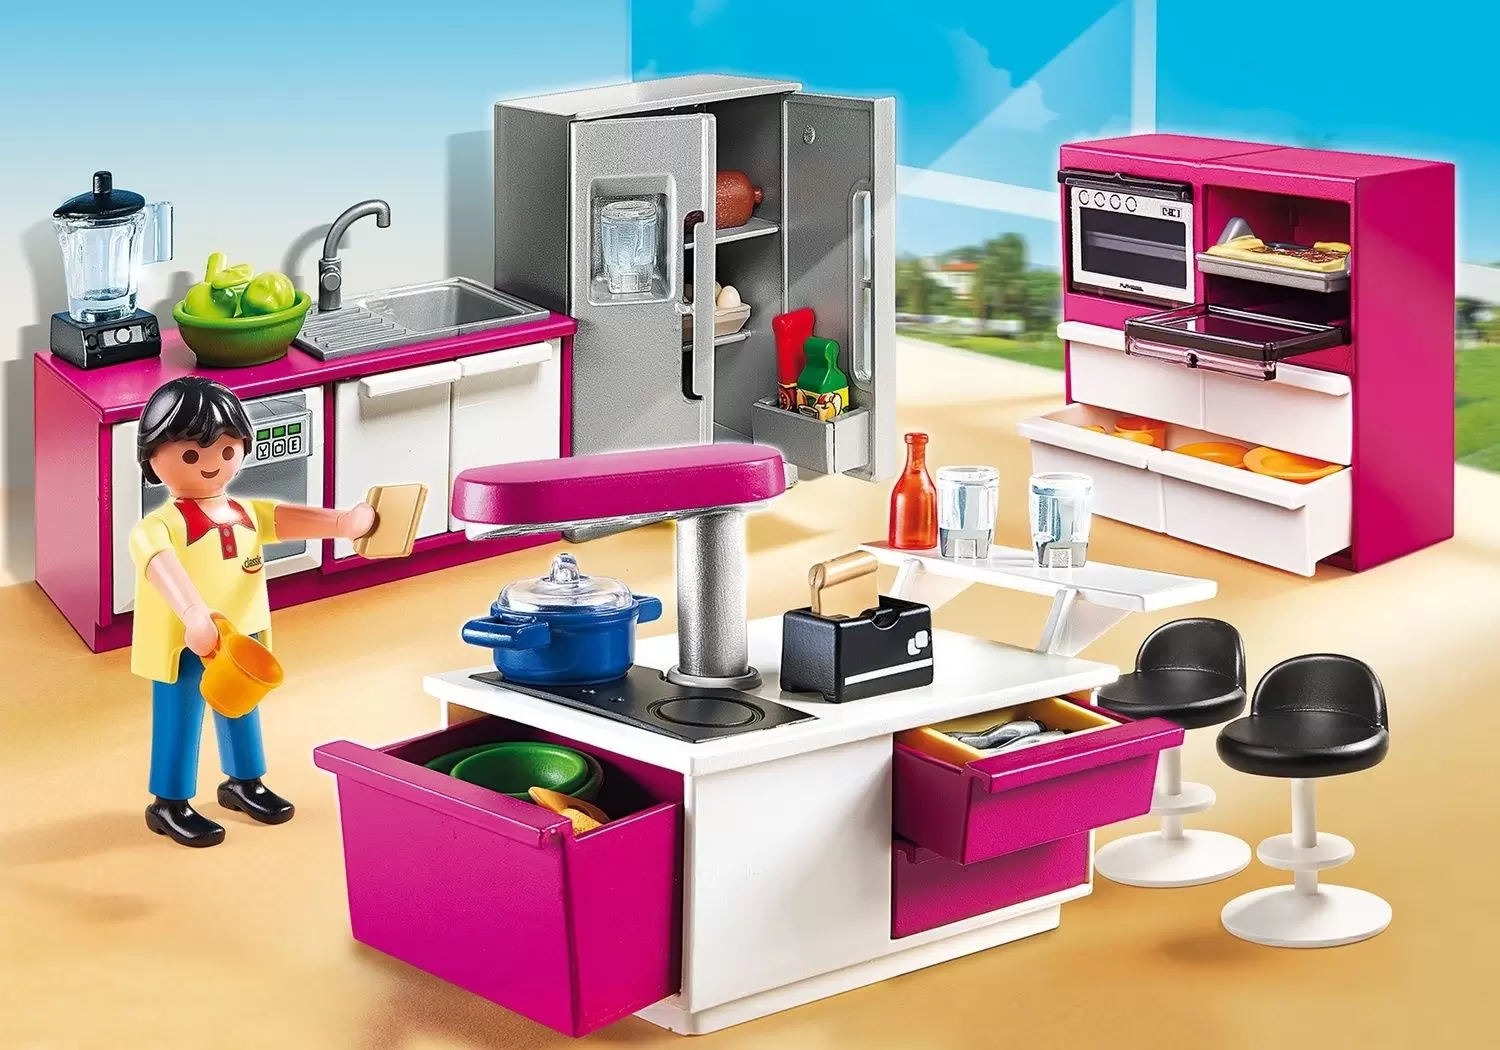 Playmobil Houses and Furniture - Modern Designer Kitchen